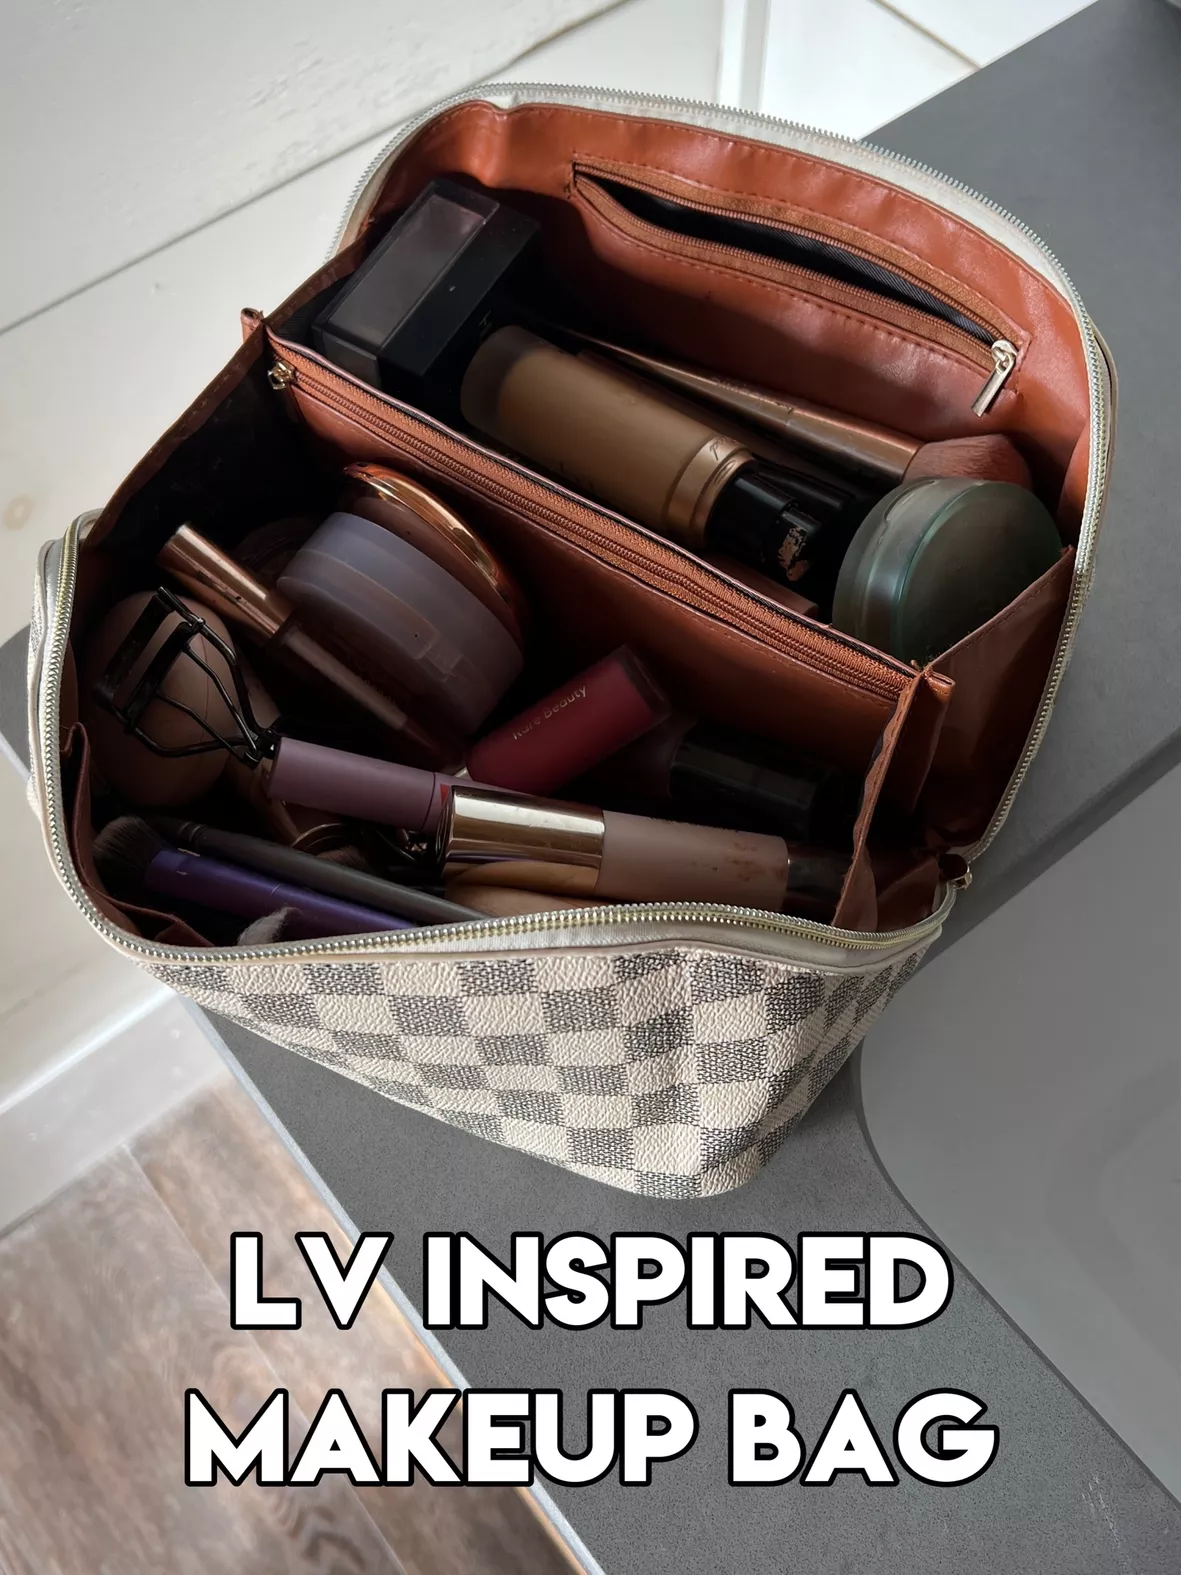 Louis Vuitton makeup bag - LV